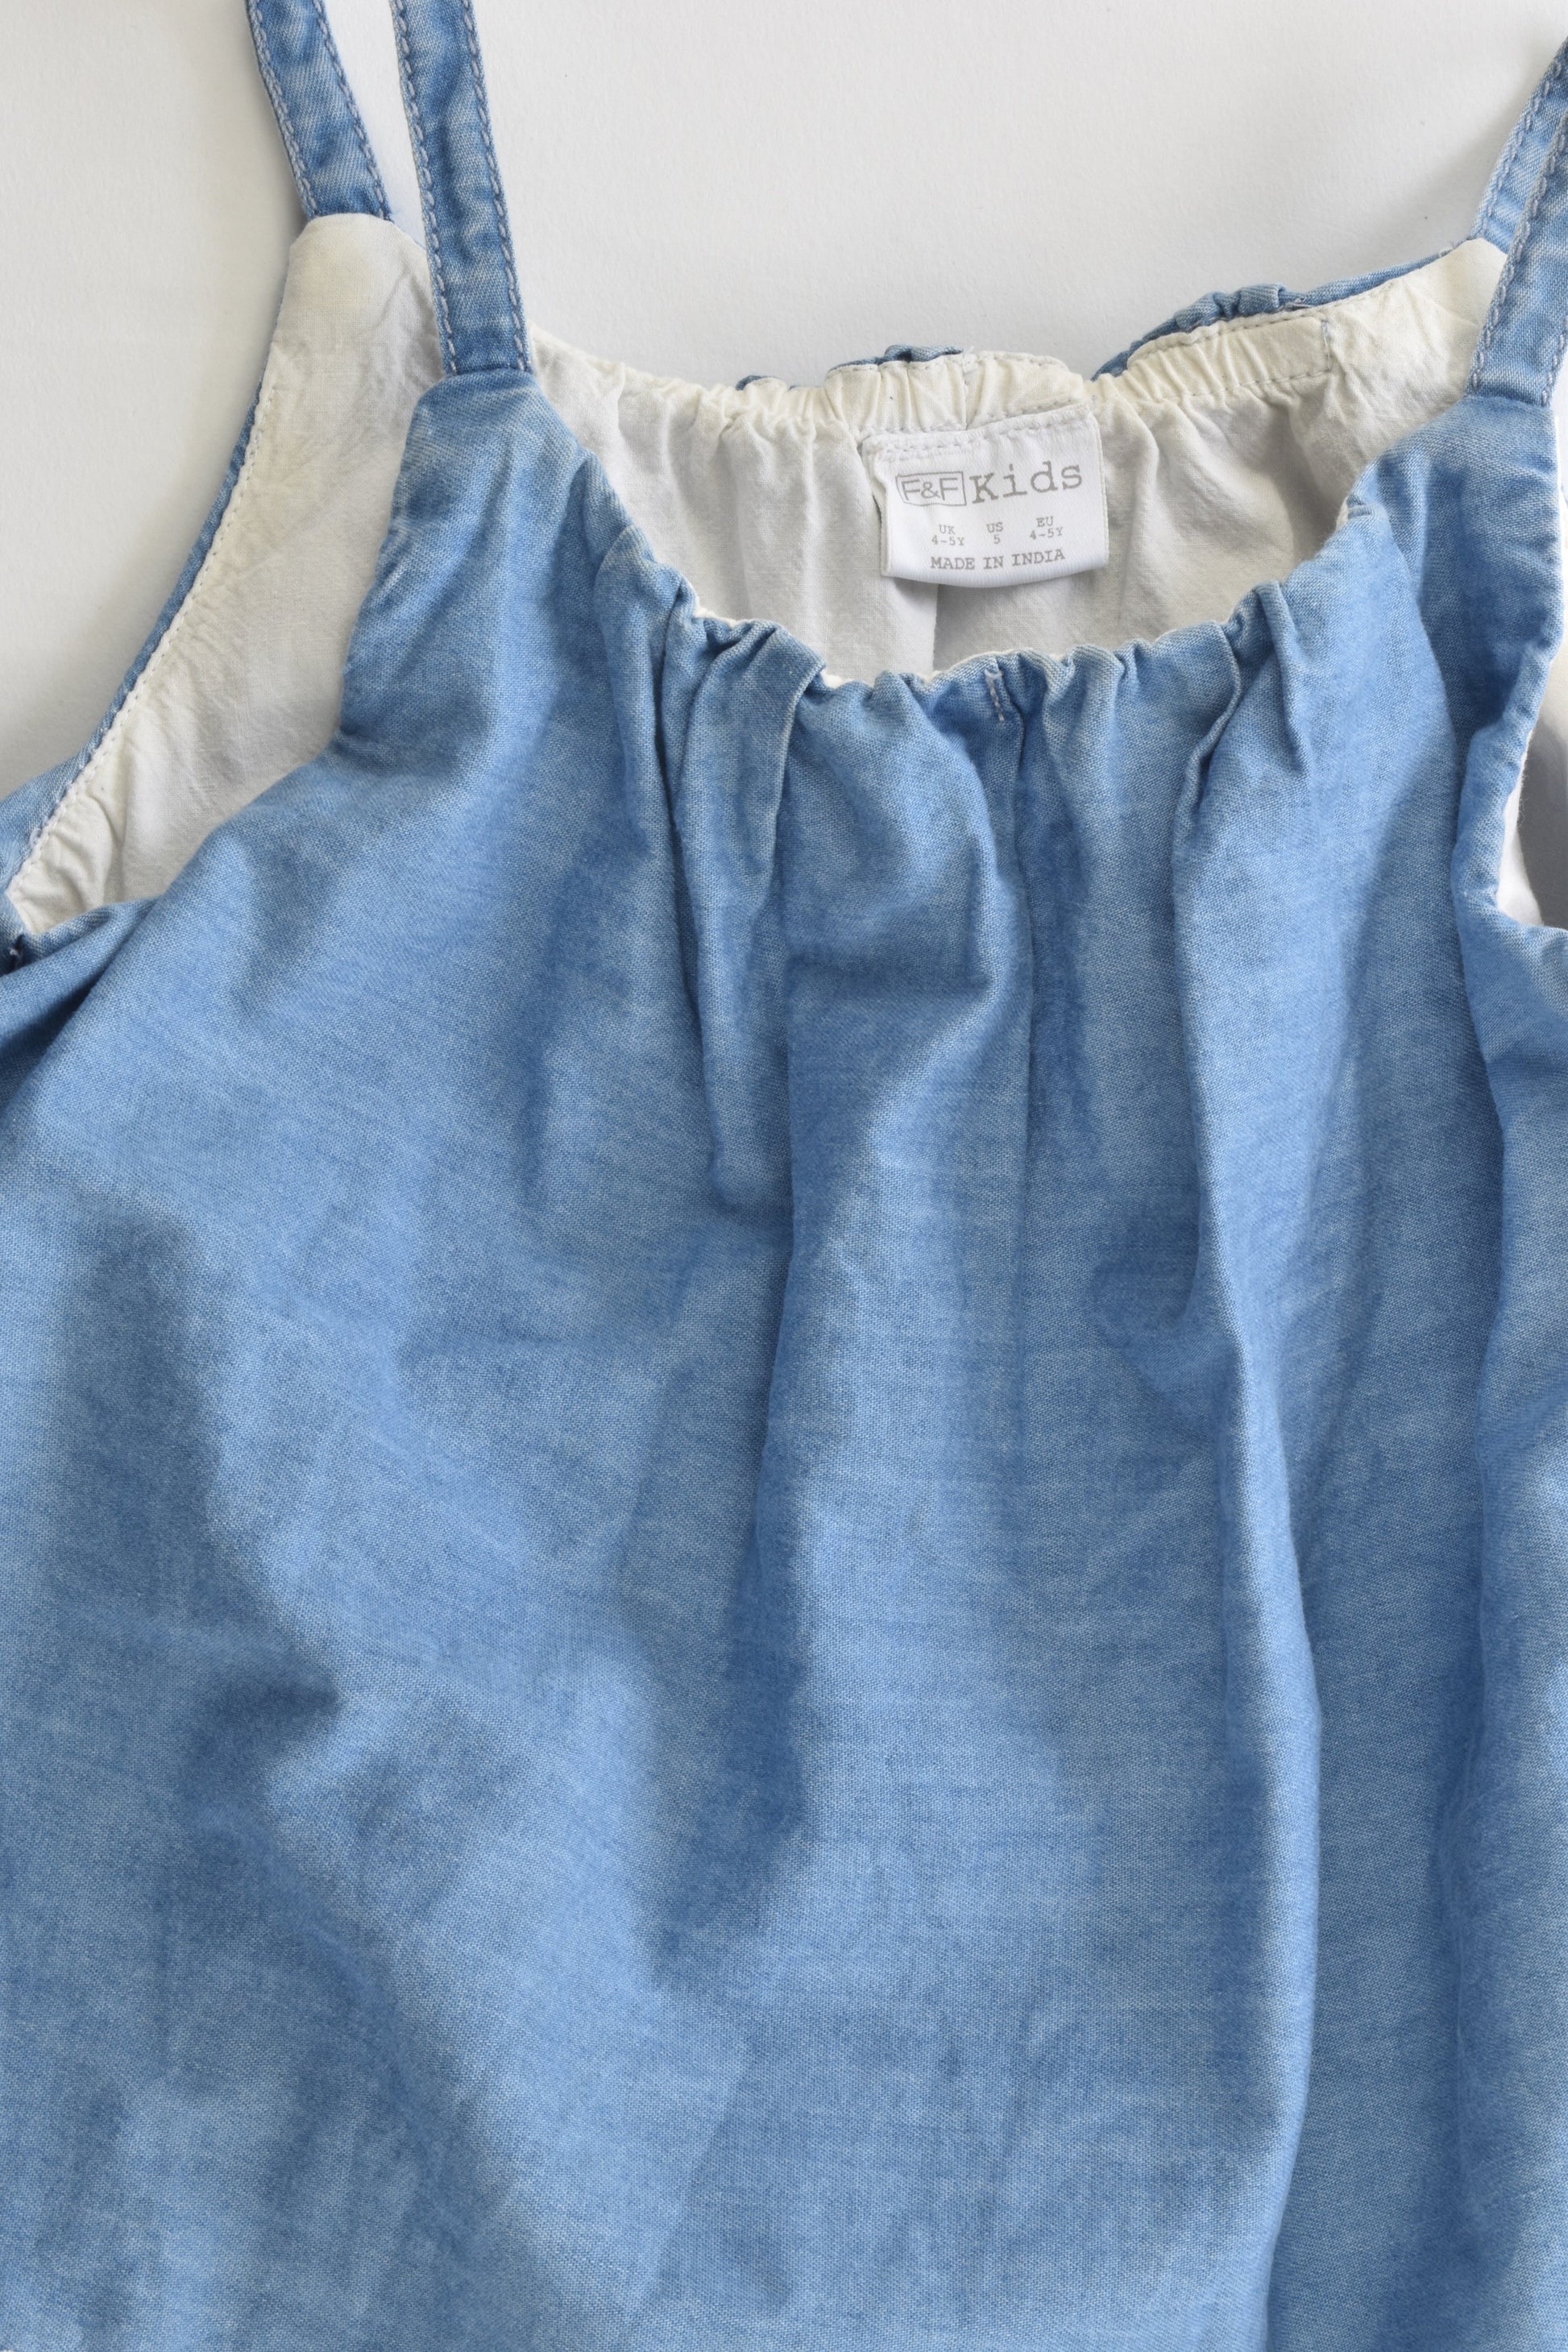 F&F (UK) Size 4-5 Soft Denim Dress with Lace Details